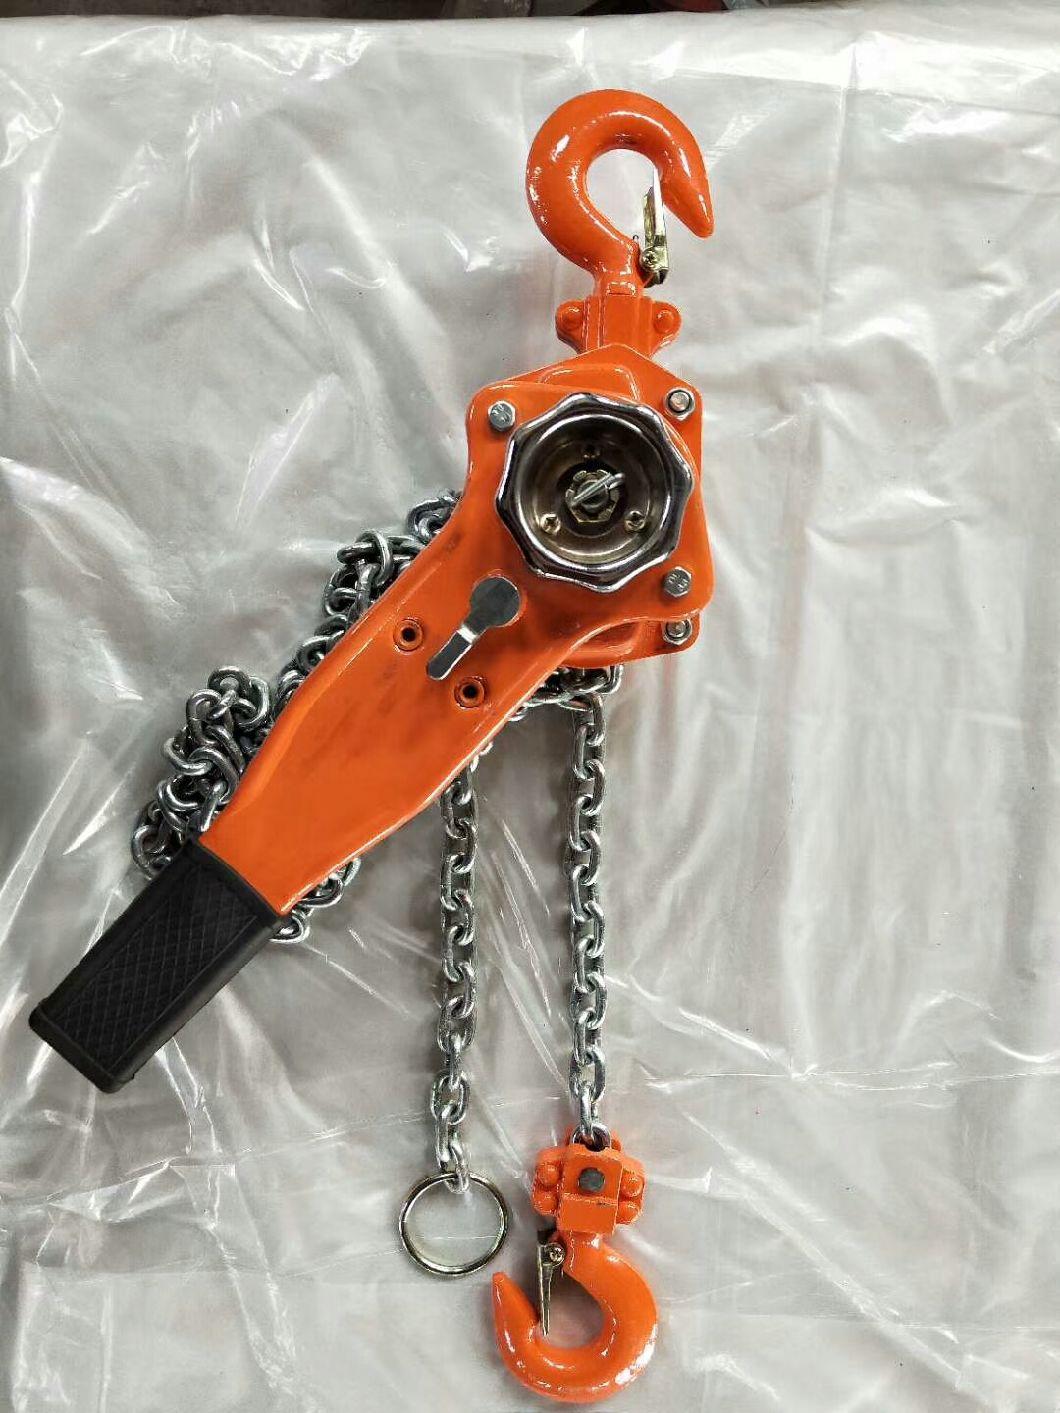 Hand Pulling Manual Chain Hoist Crane Hand Lifting Chain Block with Hook Manual Chain Hoist and Handchain Pulley Block Manual Lever Chain Hoist Crane